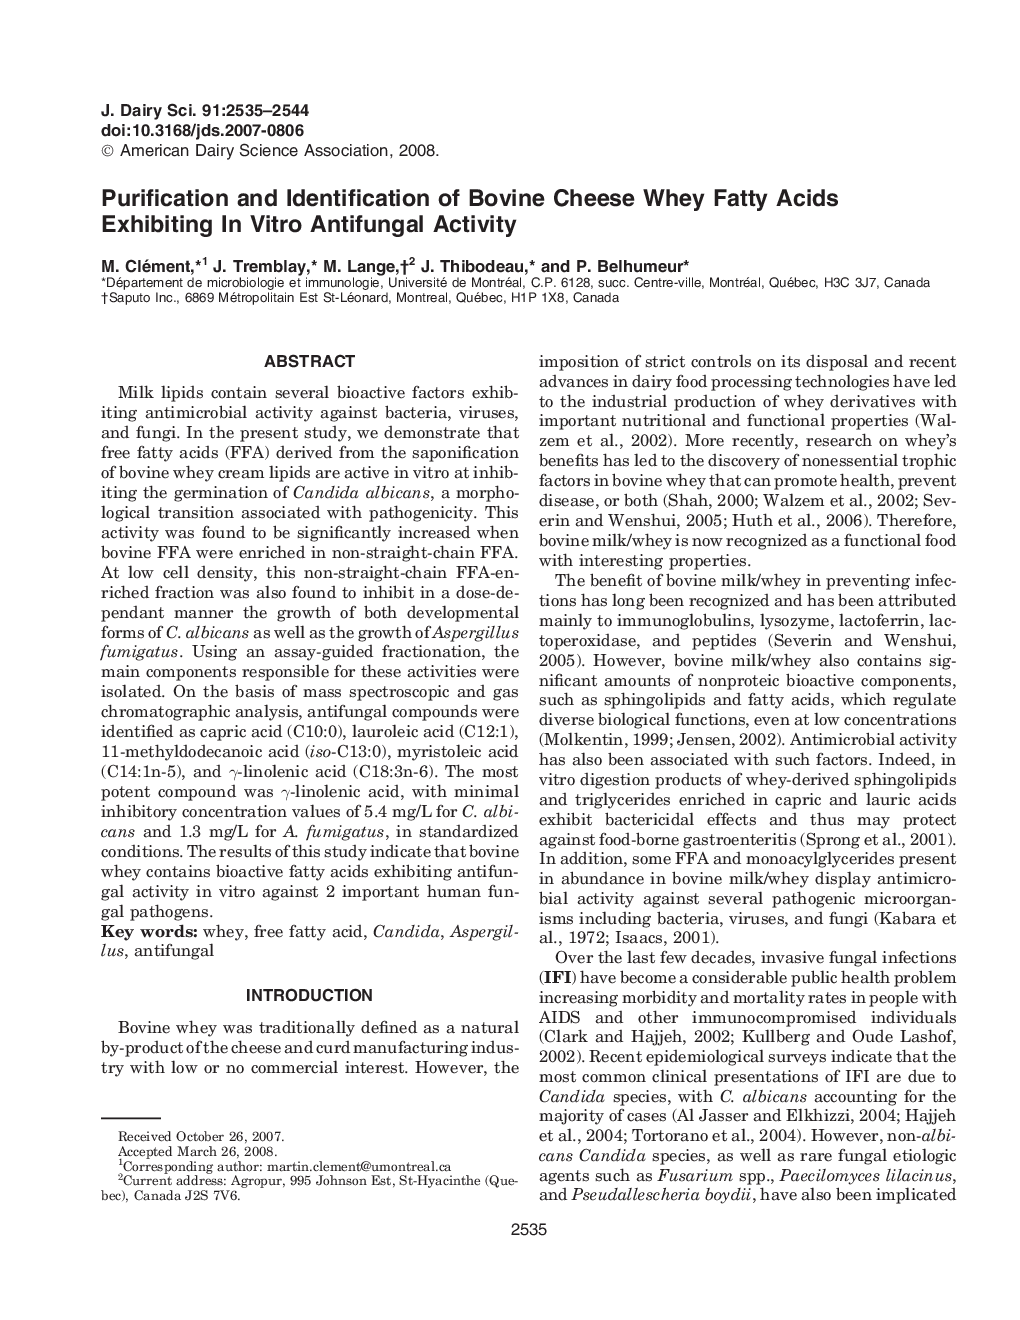 Purification and Identification of Bovine Cheese Whey Fatty Acids Exhibiting In Vitro Antifungal Activity